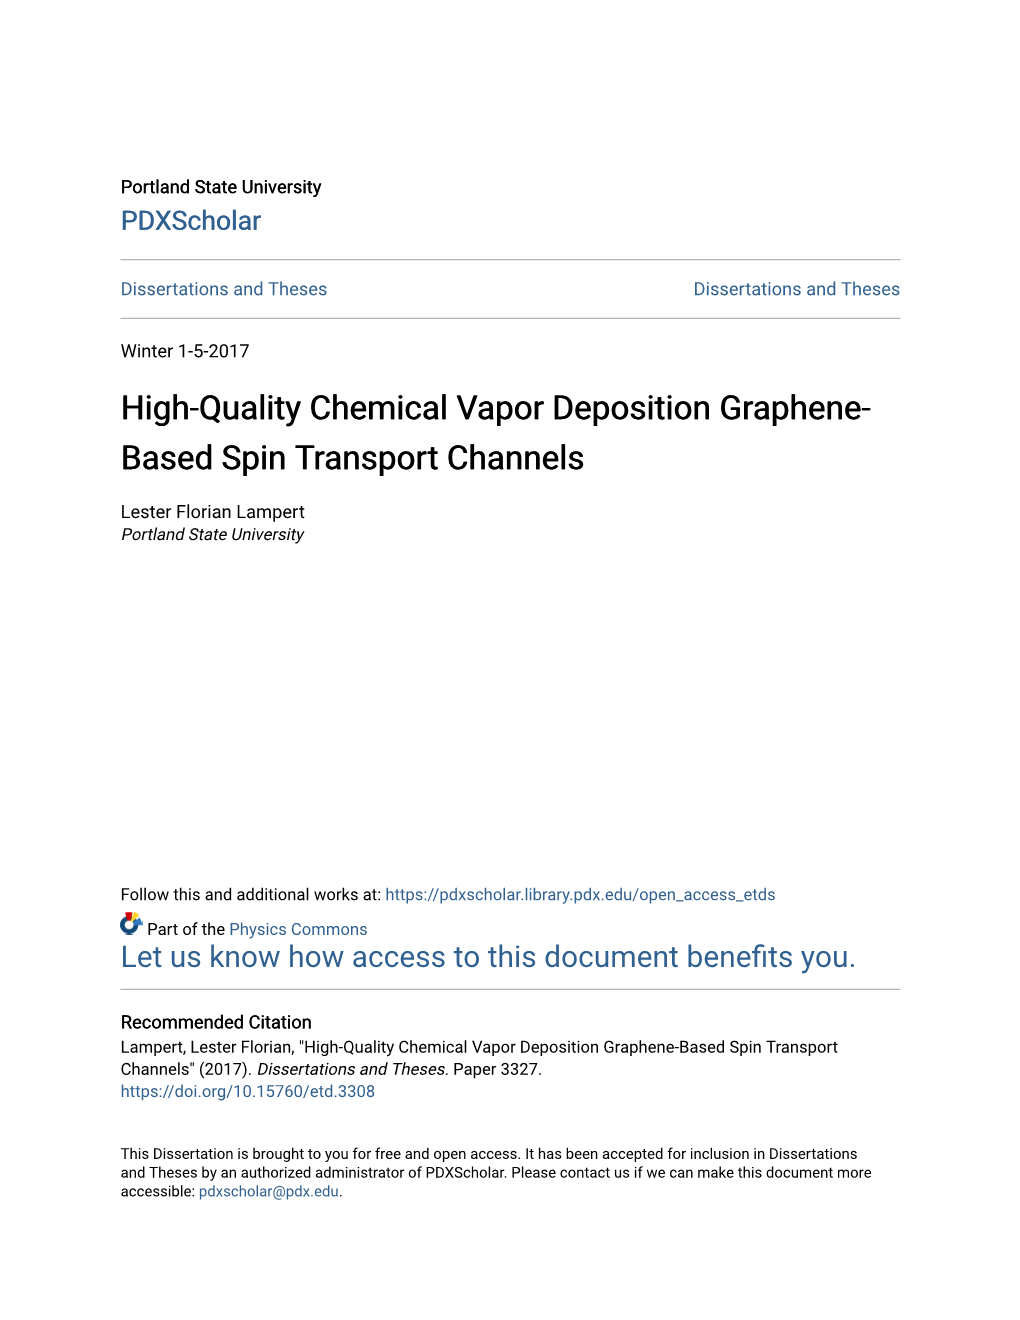 High-Quality Chemical Vapor Deposition Graphene-Based Spin Transport Channels" (2017)